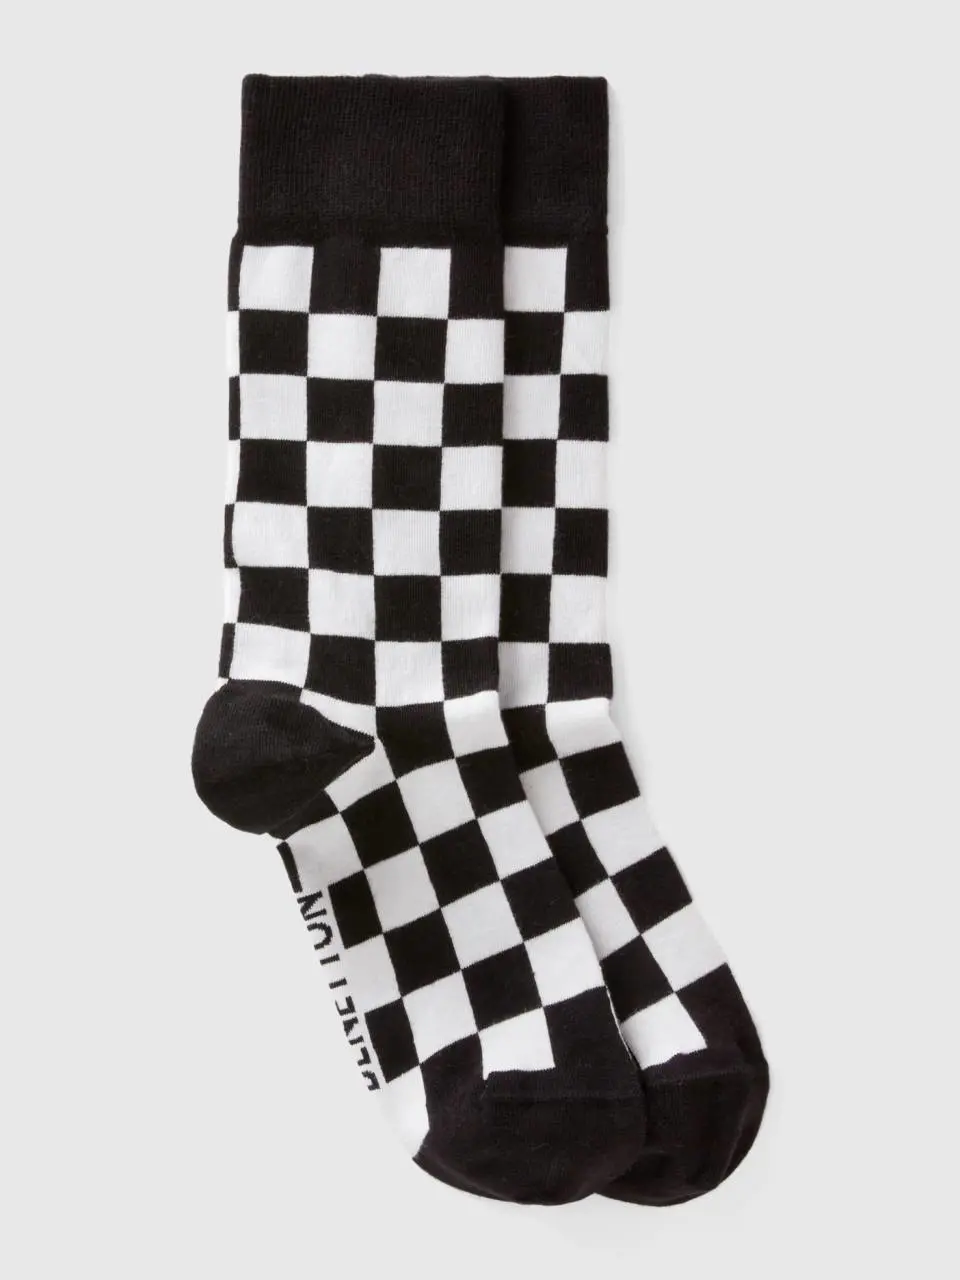 Benetton black and white checkered socks. 1